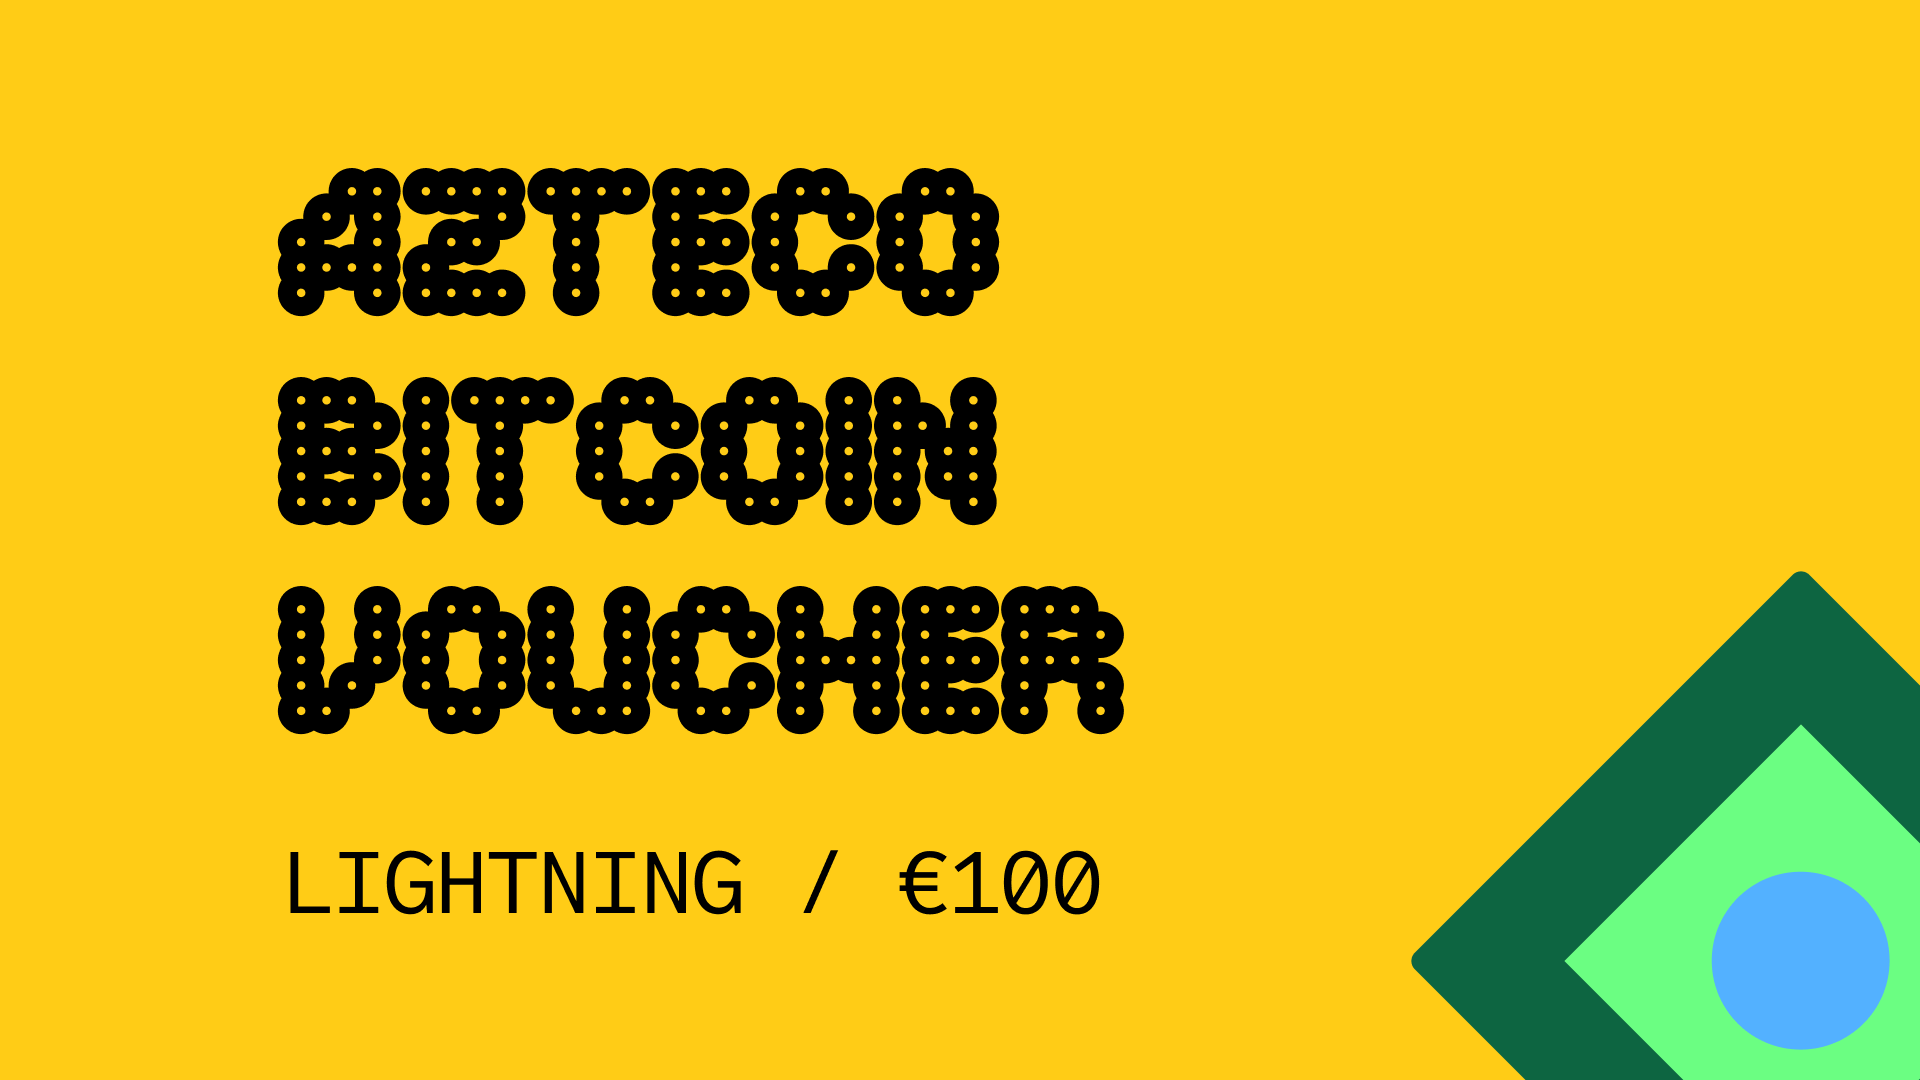 Azteco Bitcoin Lighting €100 Voucher $112.98